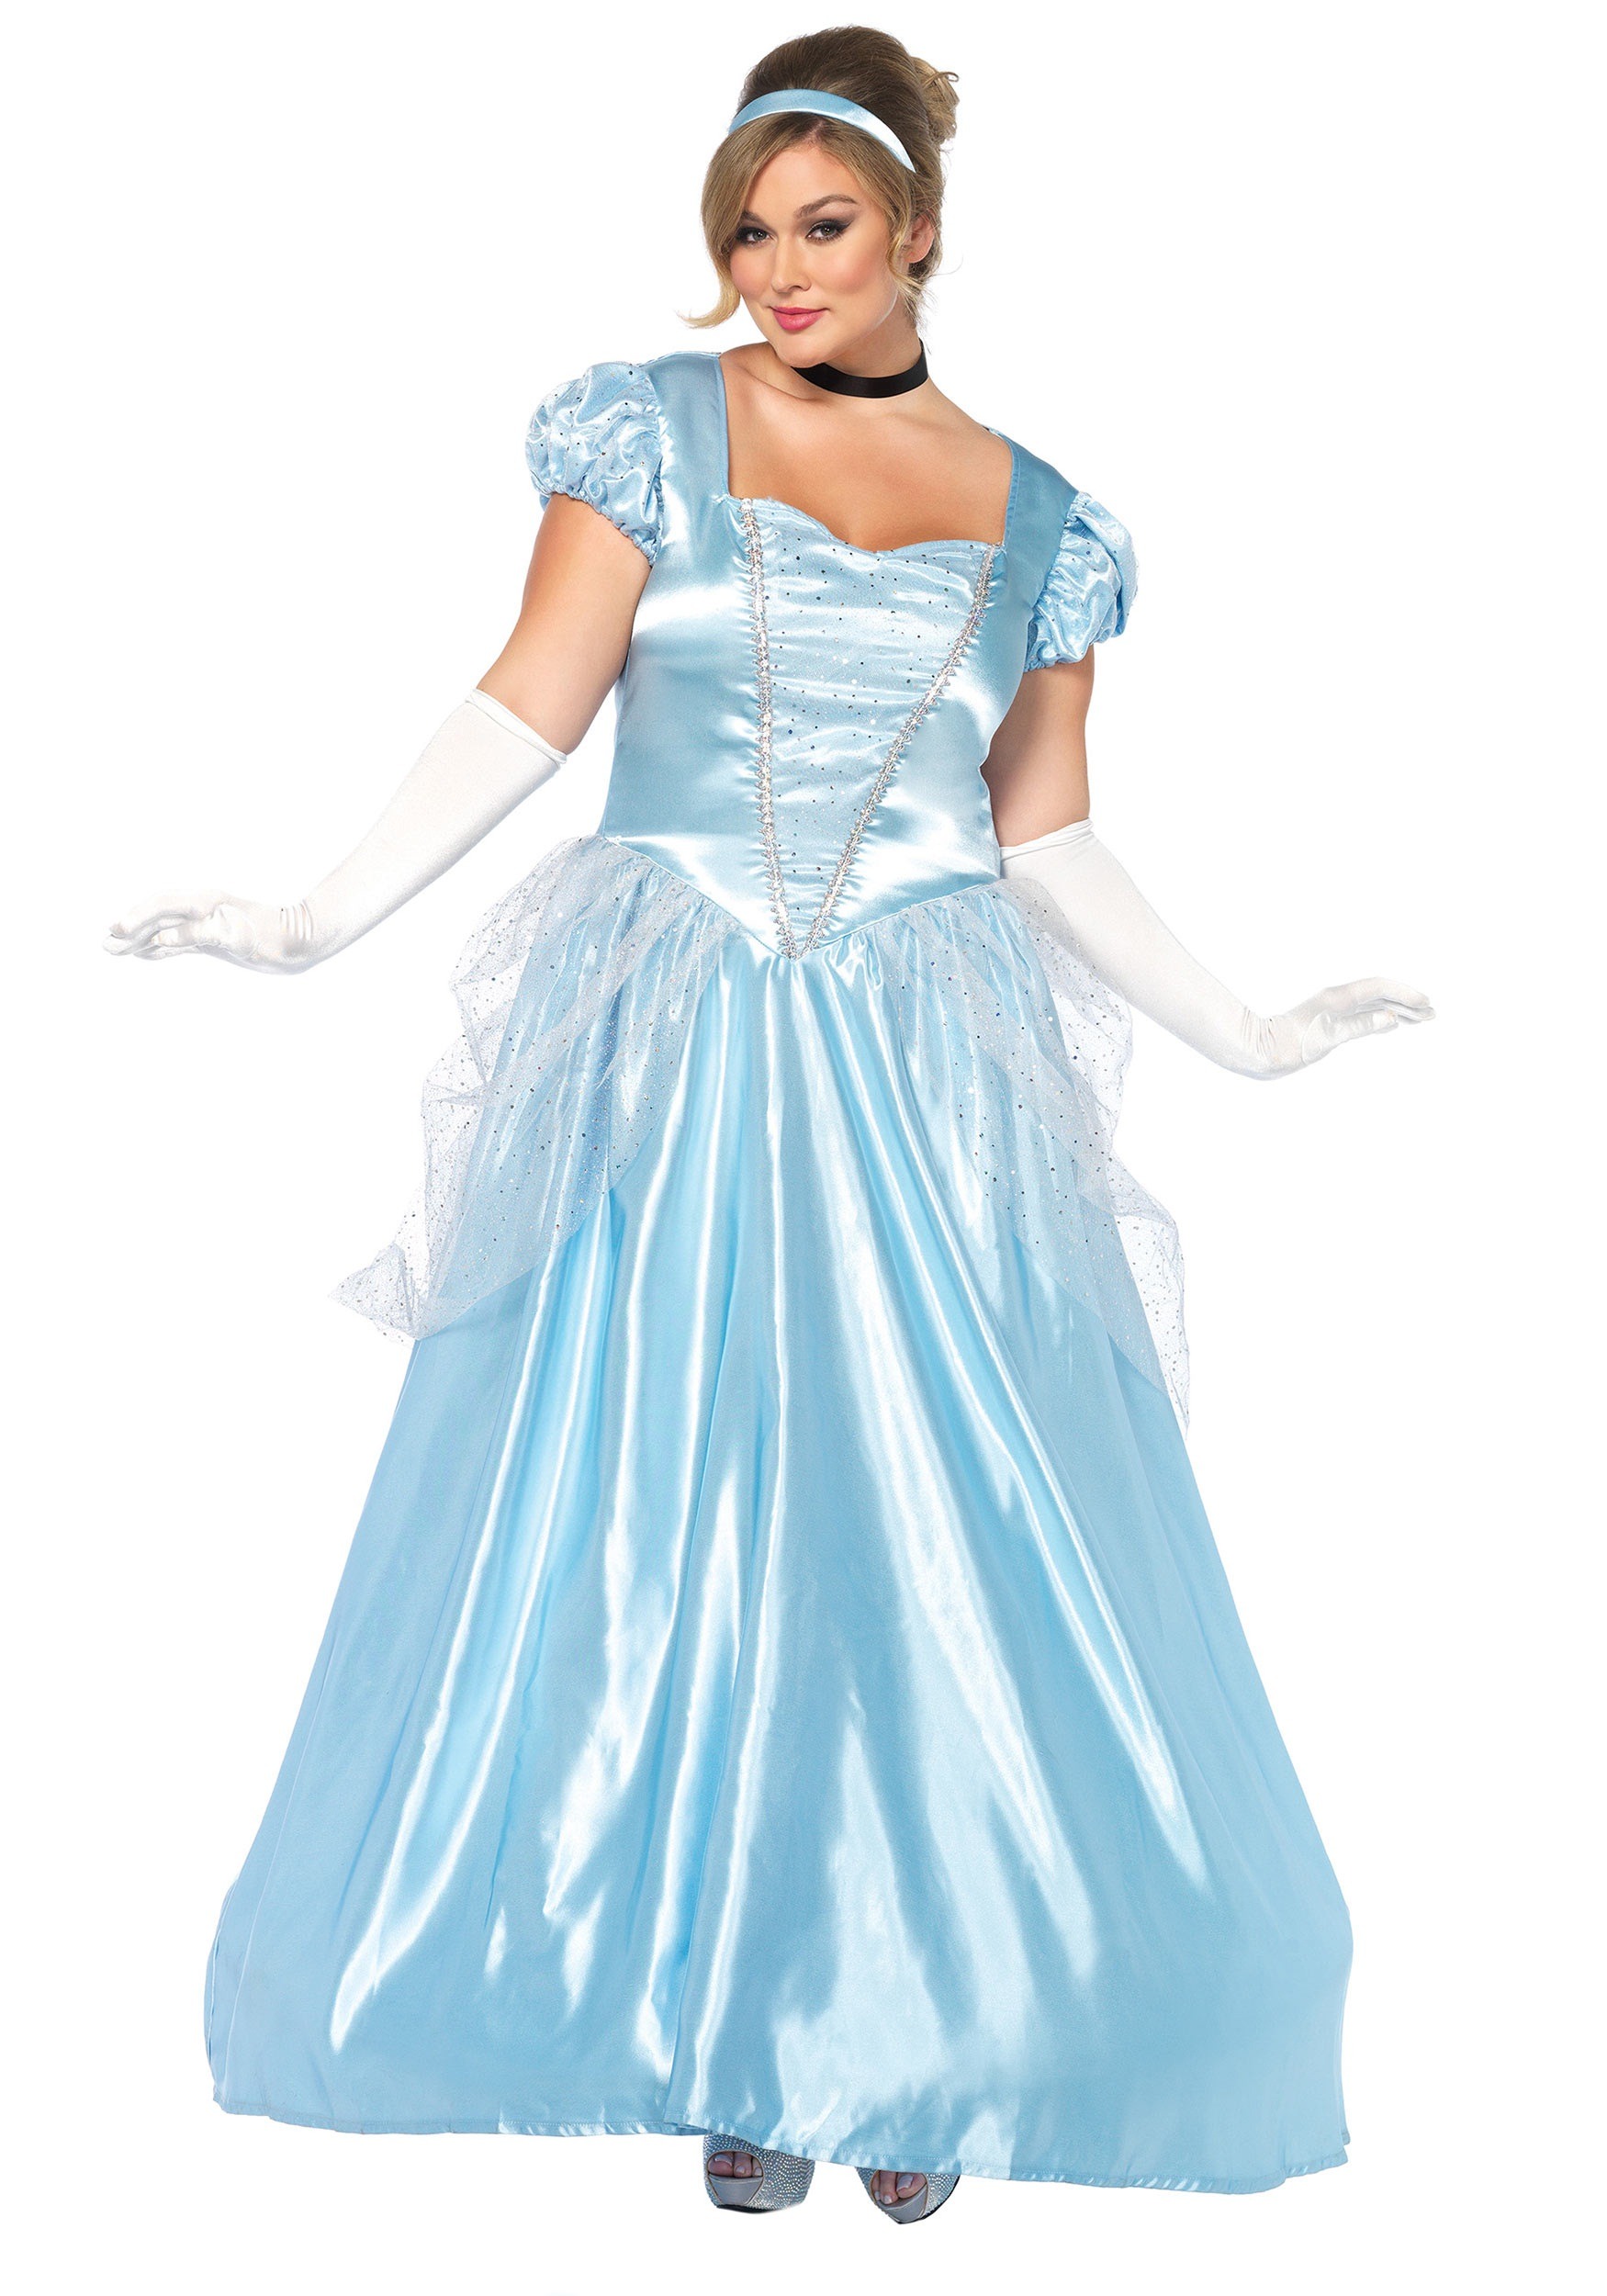 Revelations Dance Costume BLUE Peasant Peasant Cinderella Dress Adult X-Large 